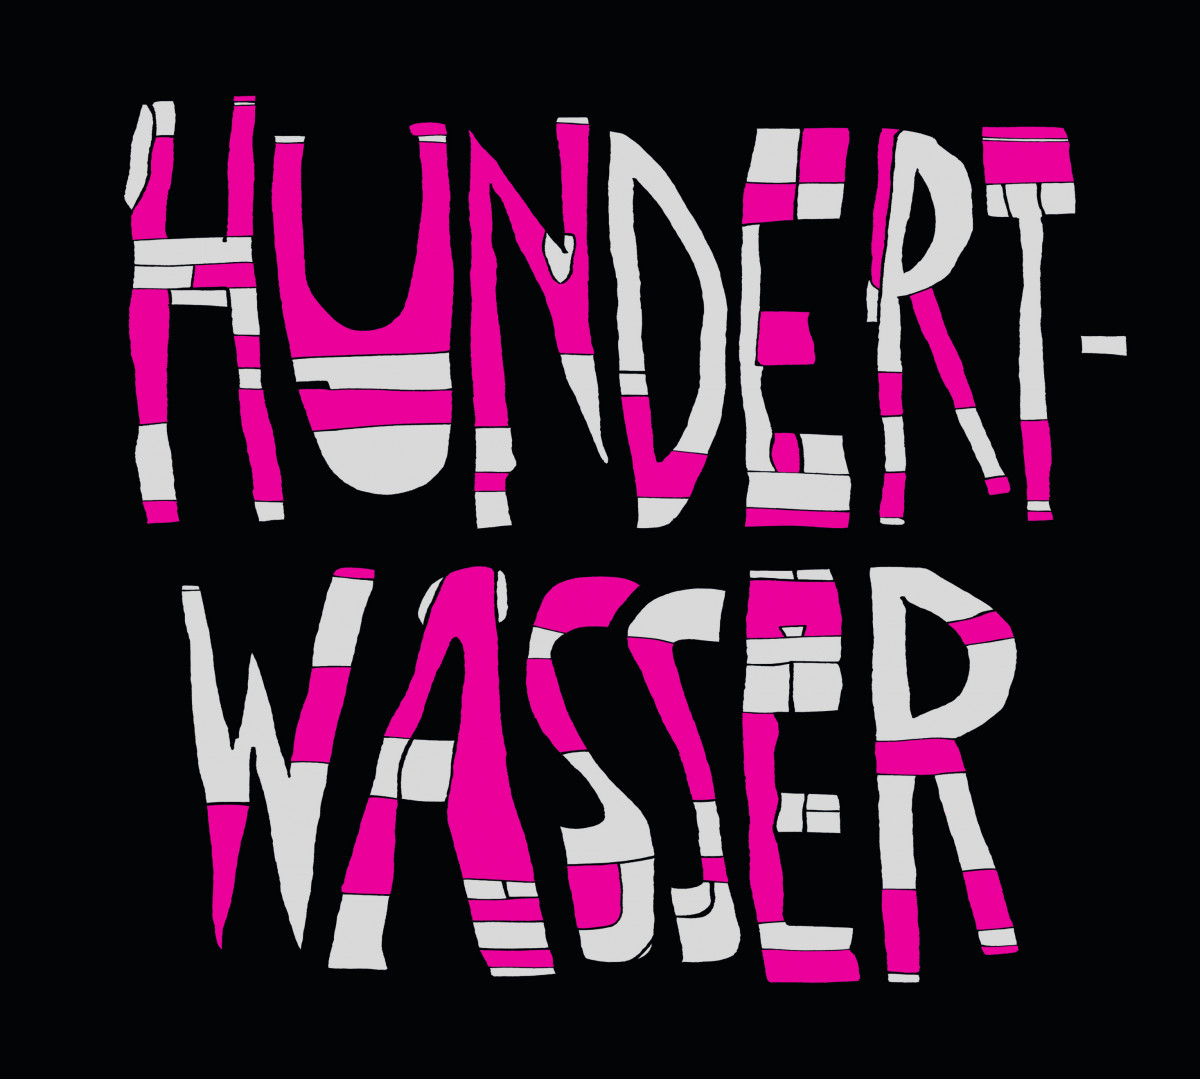 RZ3 JAHRESFLYER 2022 Marstall Hundertwasser